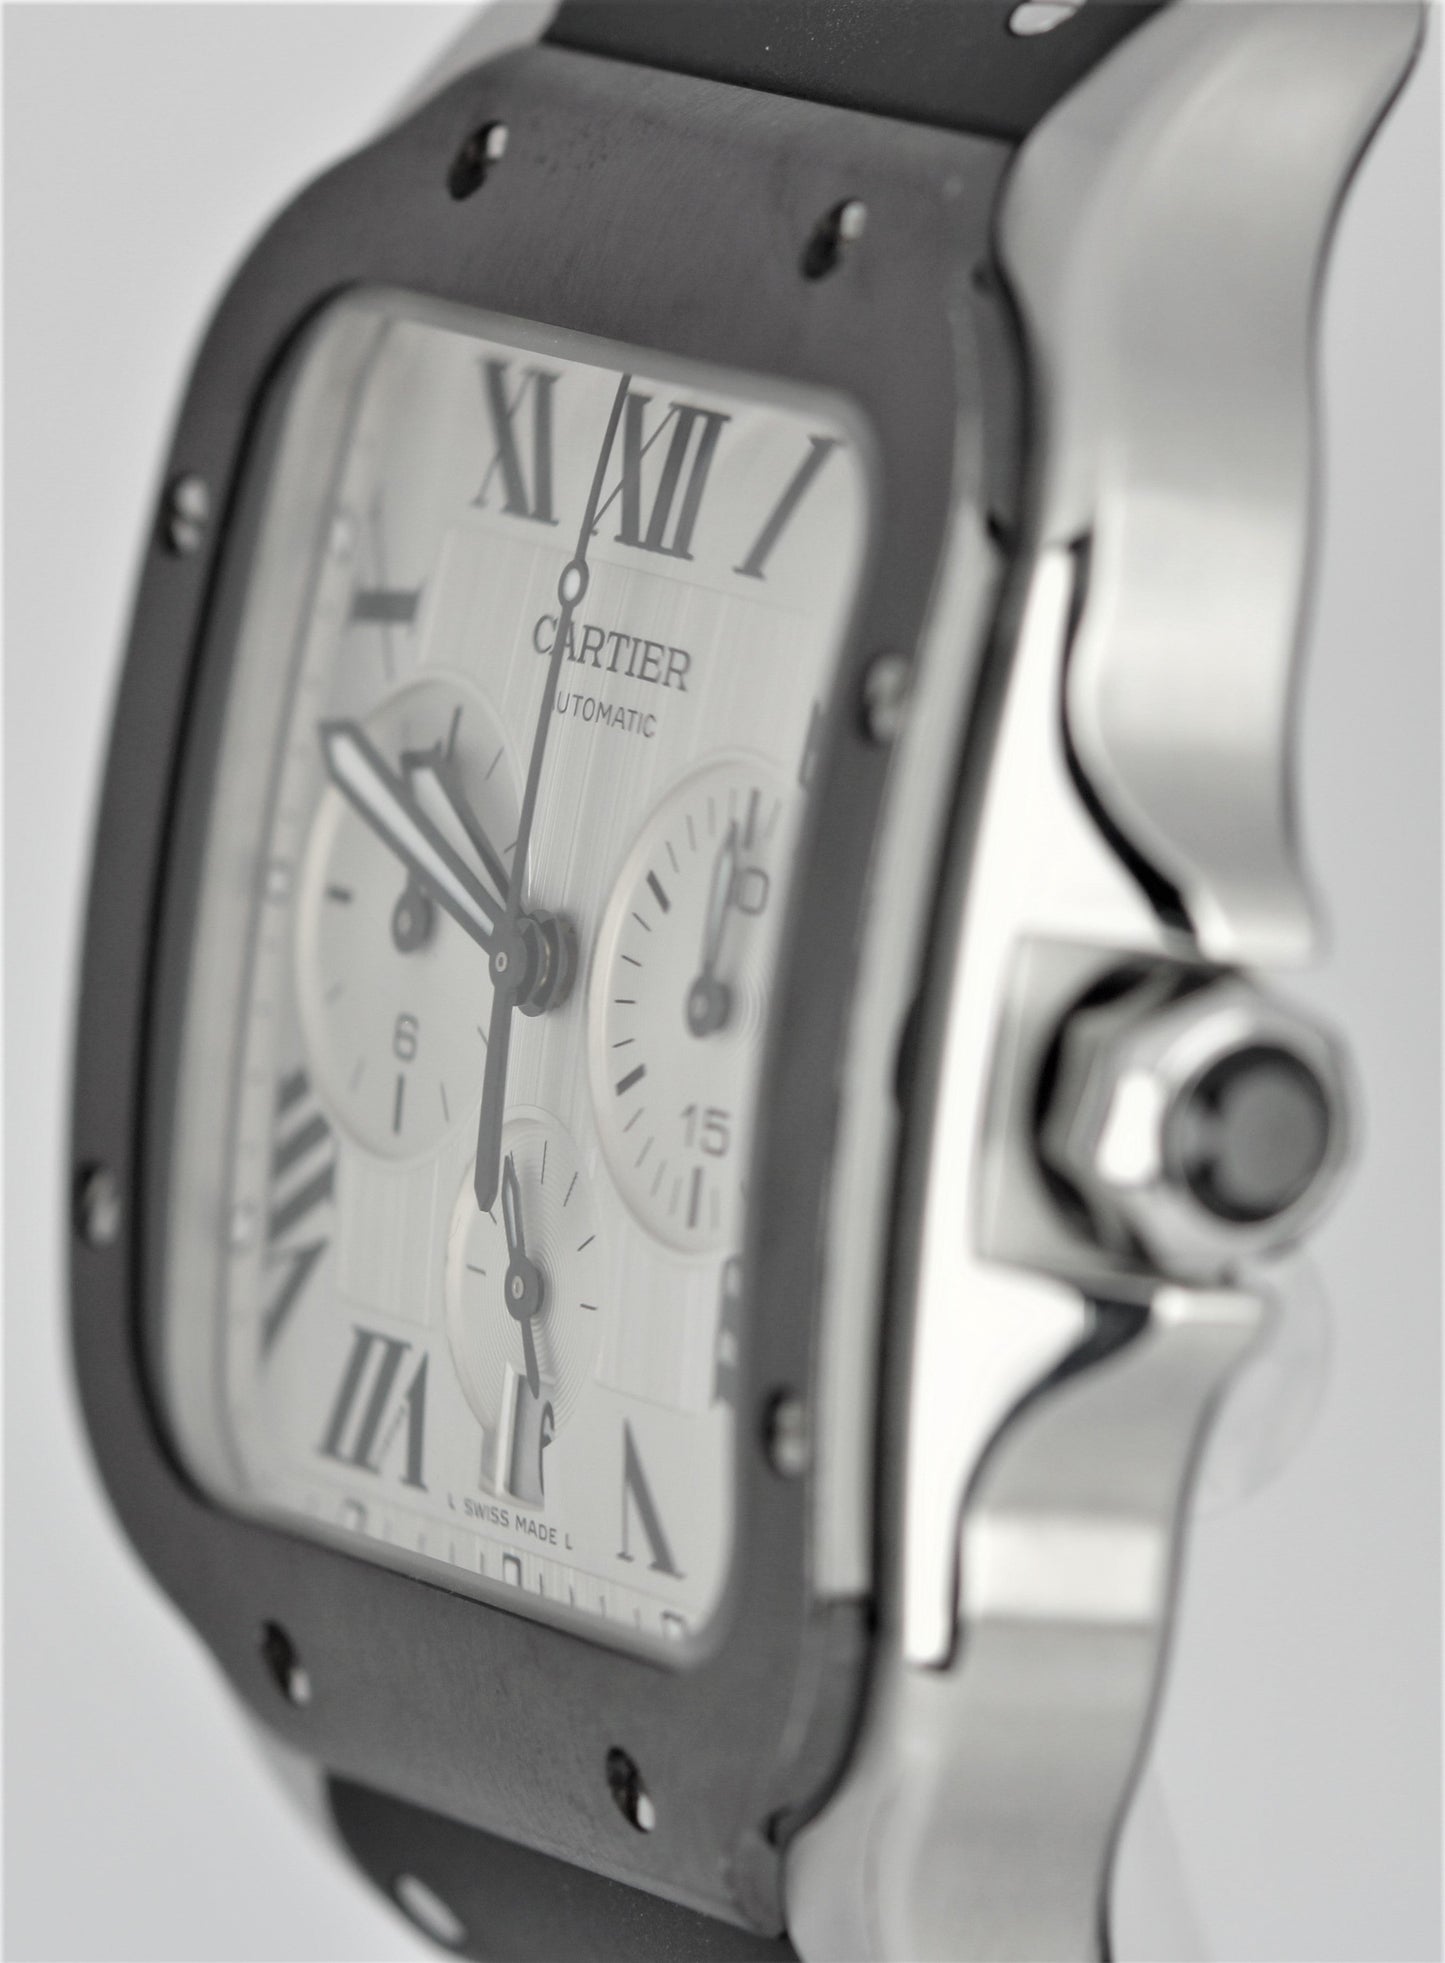 Cartier Santos Chronograph Stainless Steel ADLC Silver 43mm WSSA0017 4183 Watch